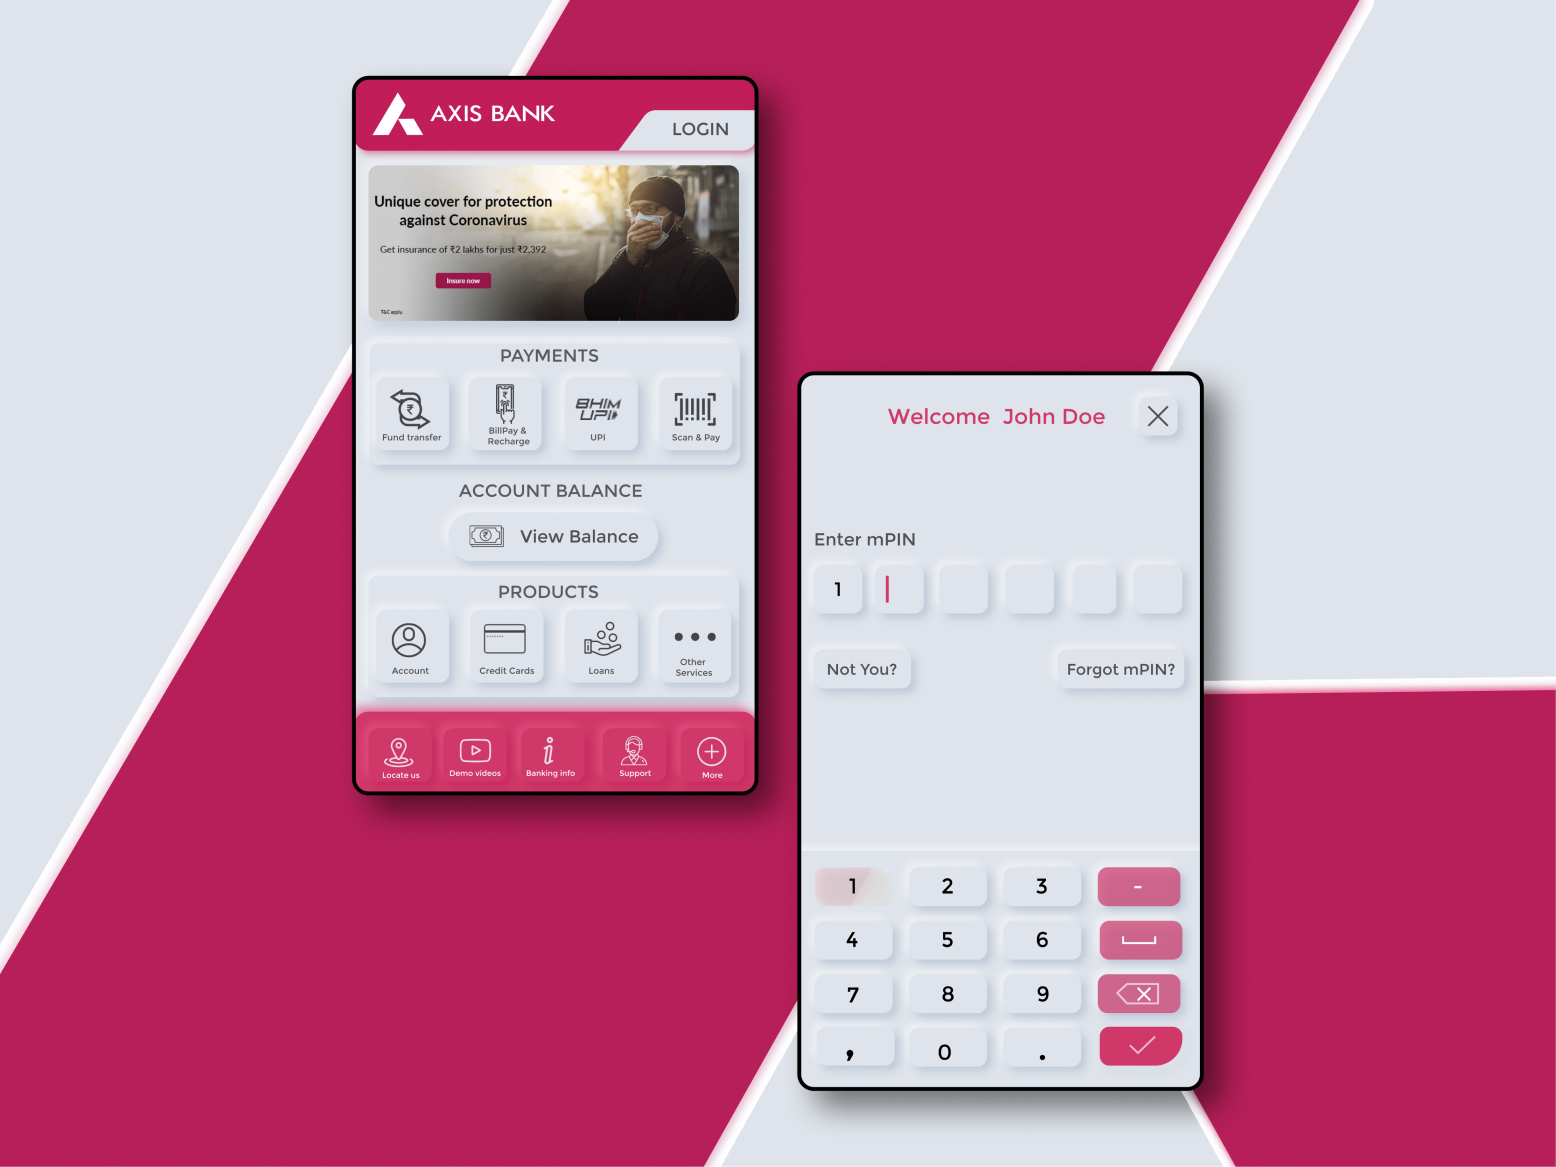 AXIS Bank mobile app UI Design by Avinash Gupta on Dribbble